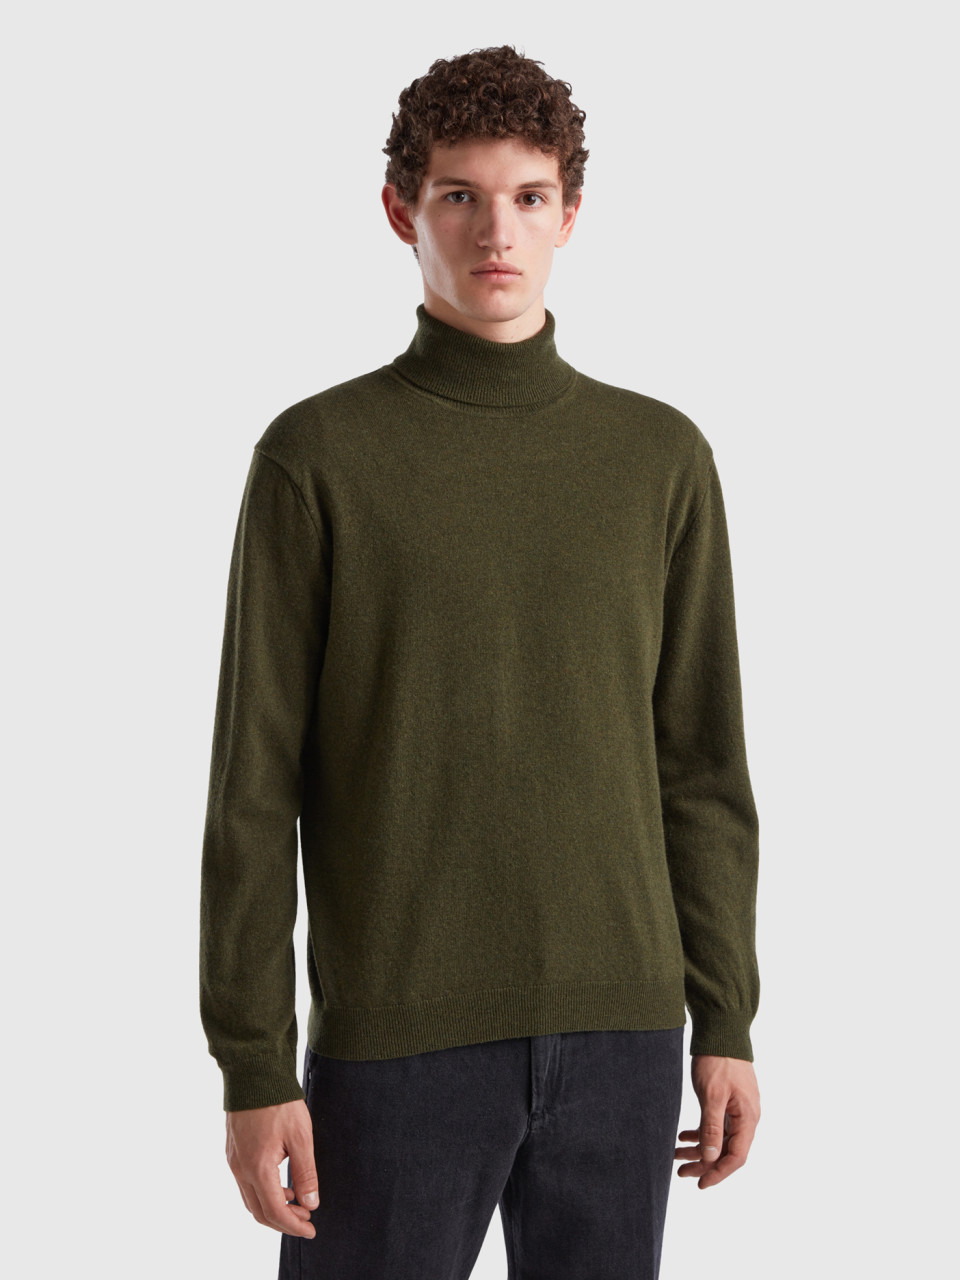 Benetton, Military Green Turtleneck In Pure Merino Wool, Military Green, Men